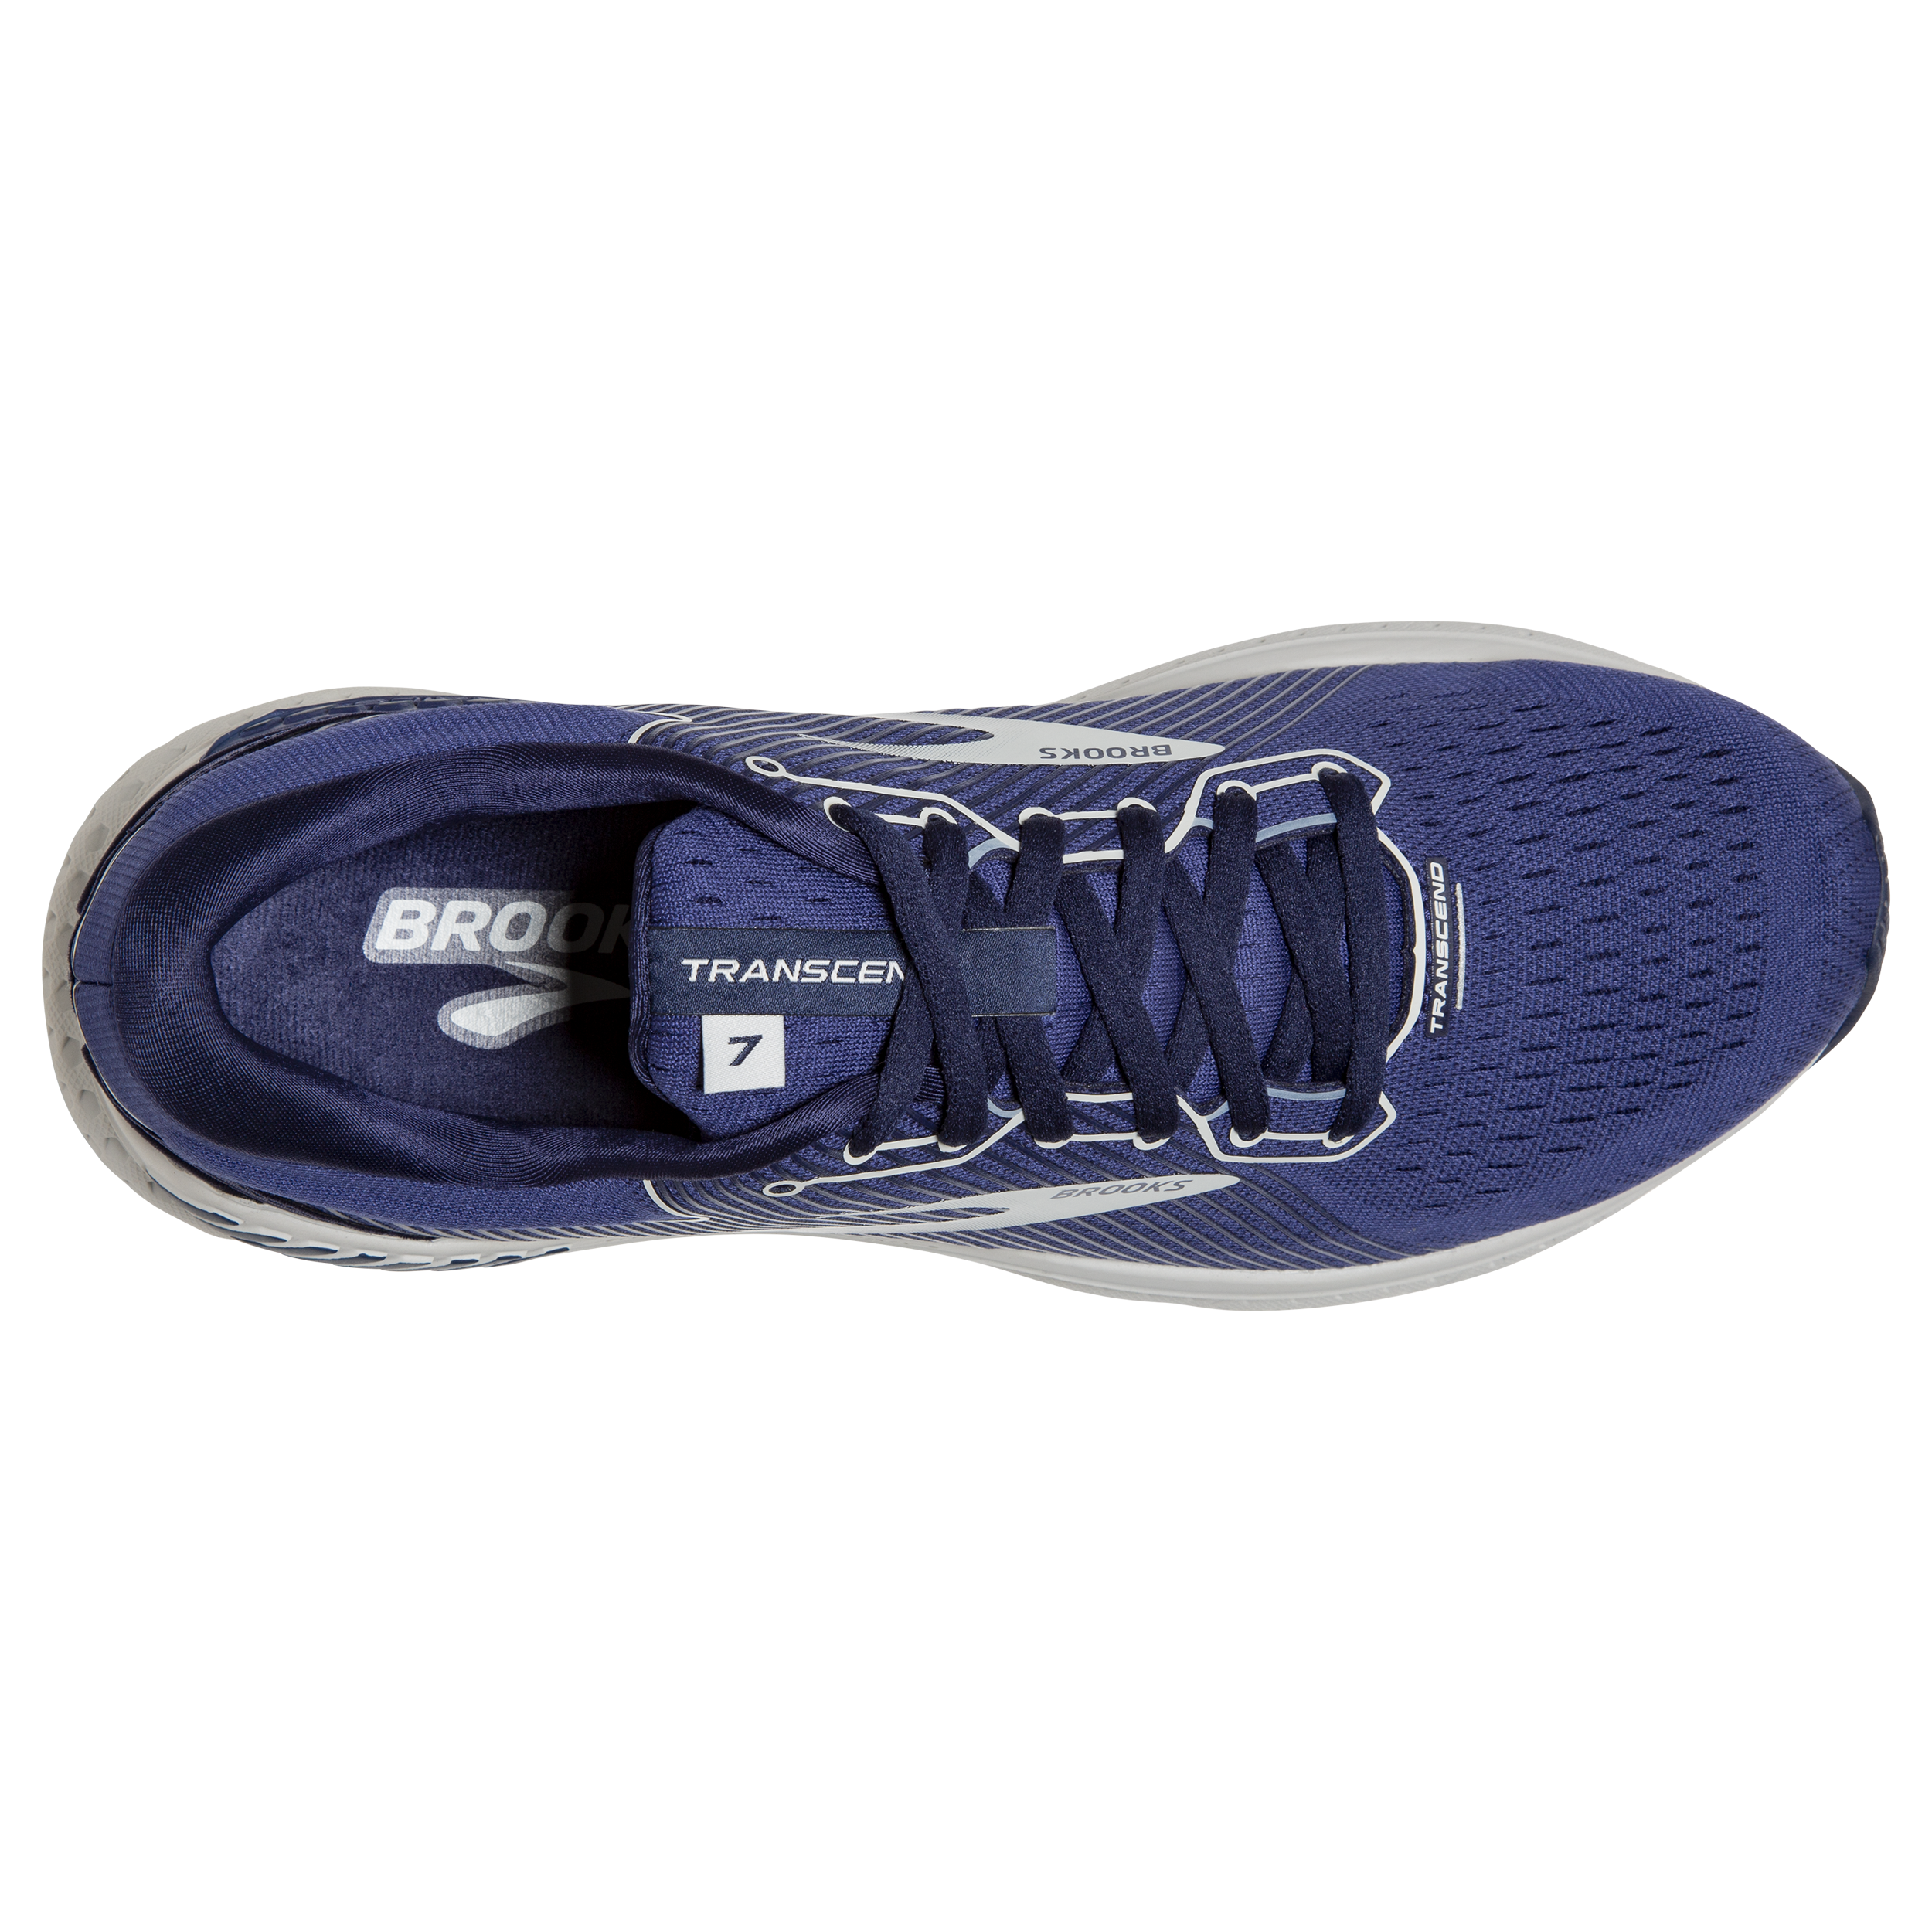 M Deep Cobalt/Grey/Navy Details about   Brooks Men's Transcend 7 Running Shoe US 10 D 